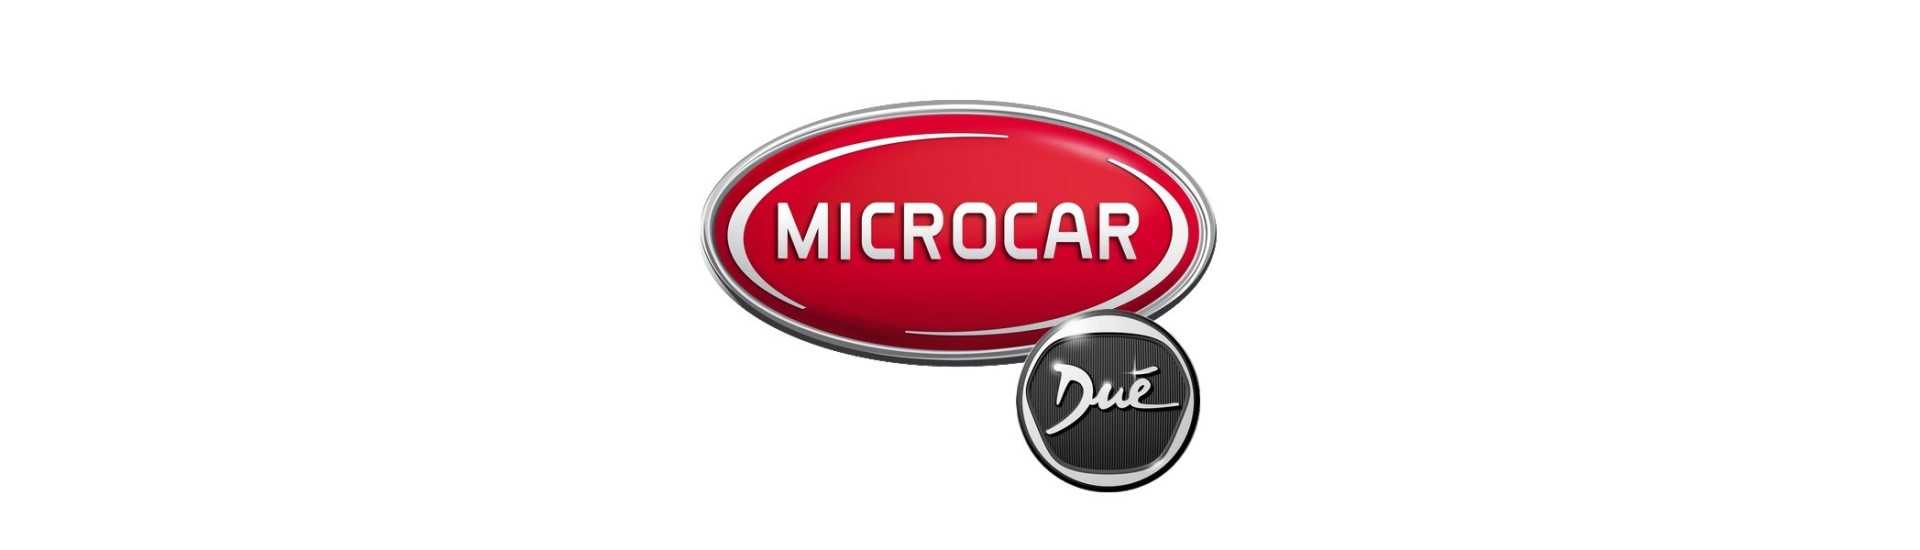 Full moyeu set best car prices without permit Microcar Dué